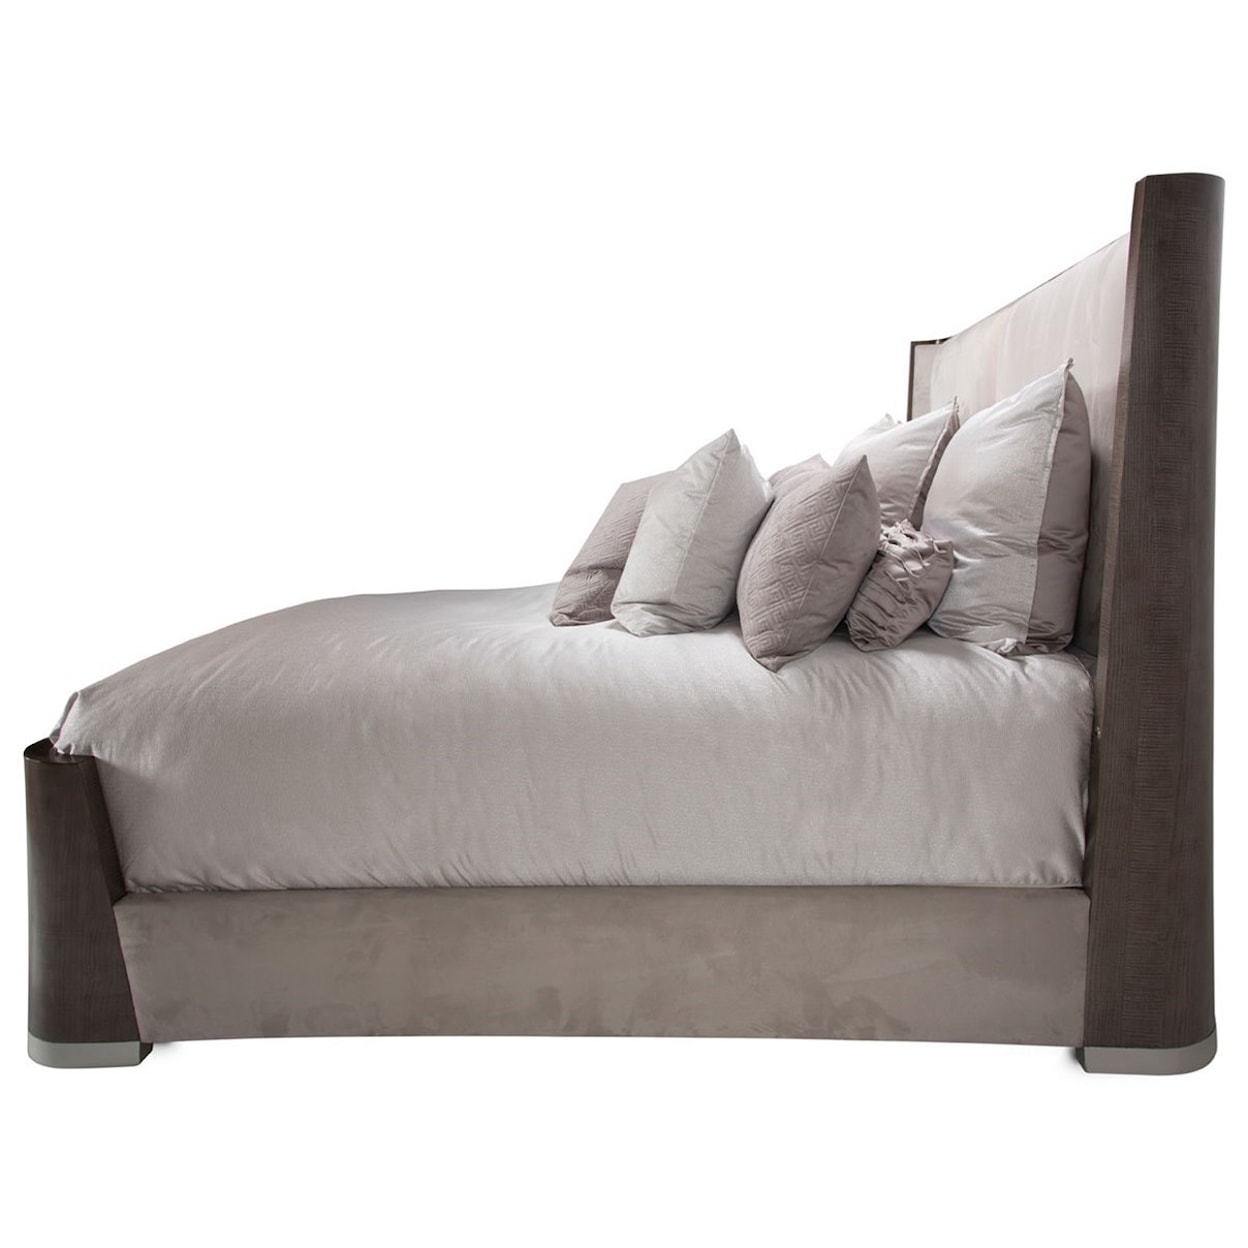 Michael Amini Roxbury Park Queen Upholstered Bed